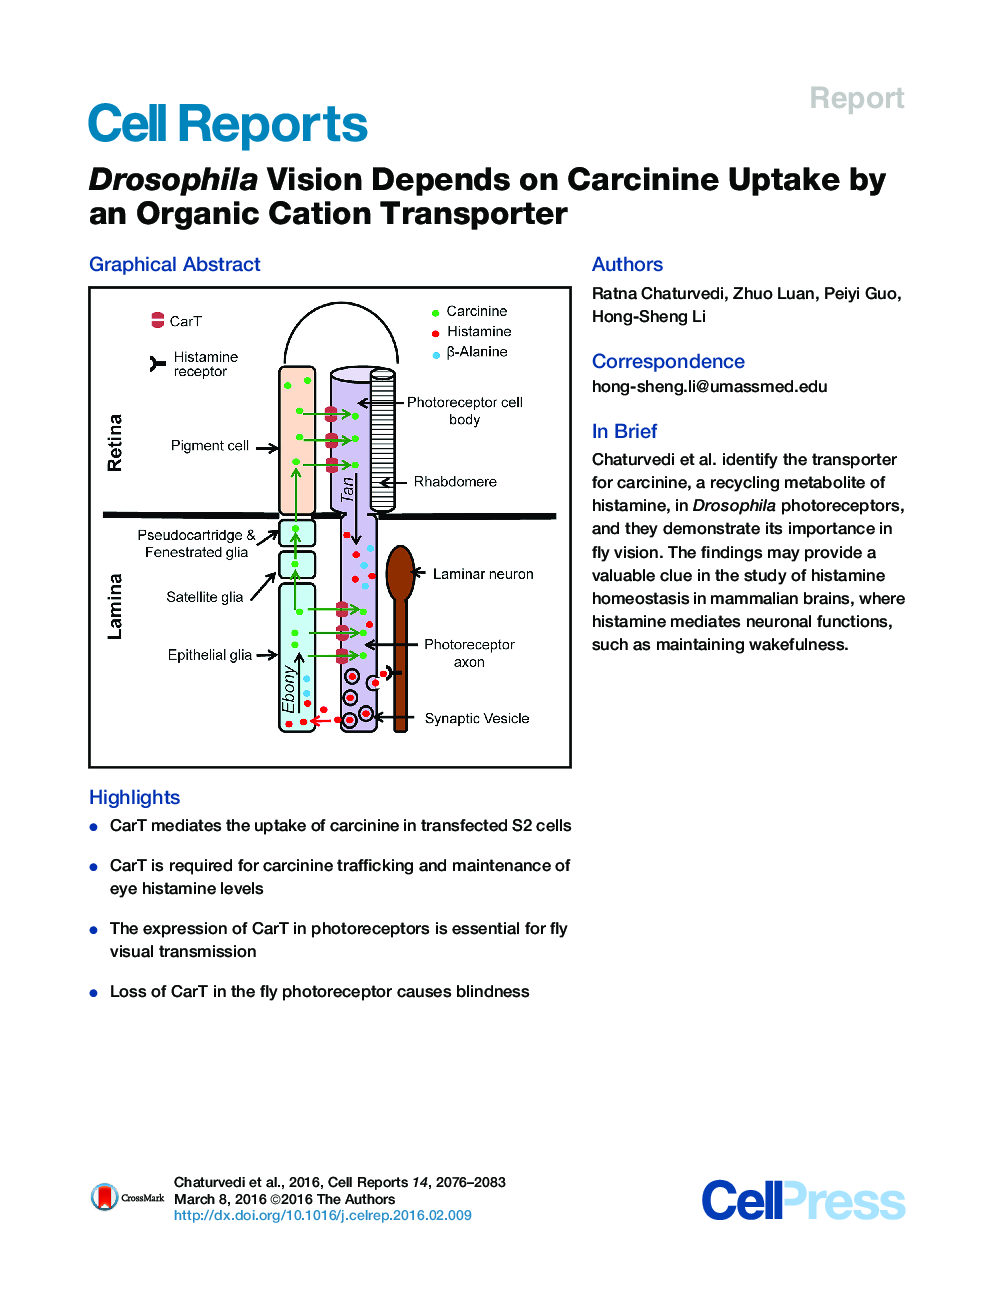 Drosophila Vision Depends on Carcinine Uptake by an Organic Cation Transporter 